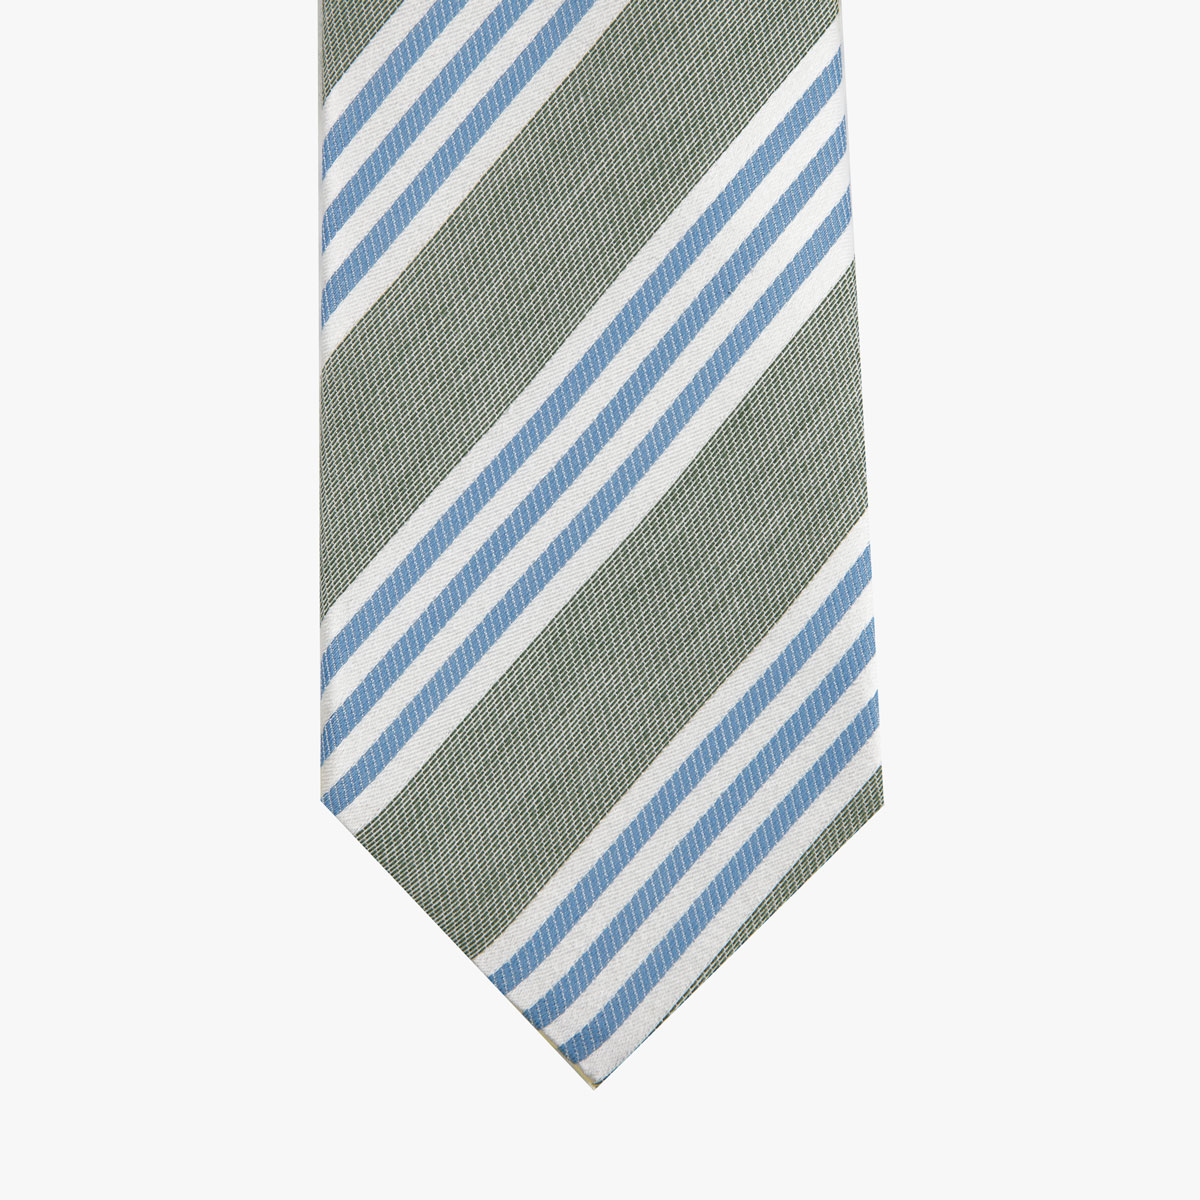 Krawatte glatt gestreift in grün blau